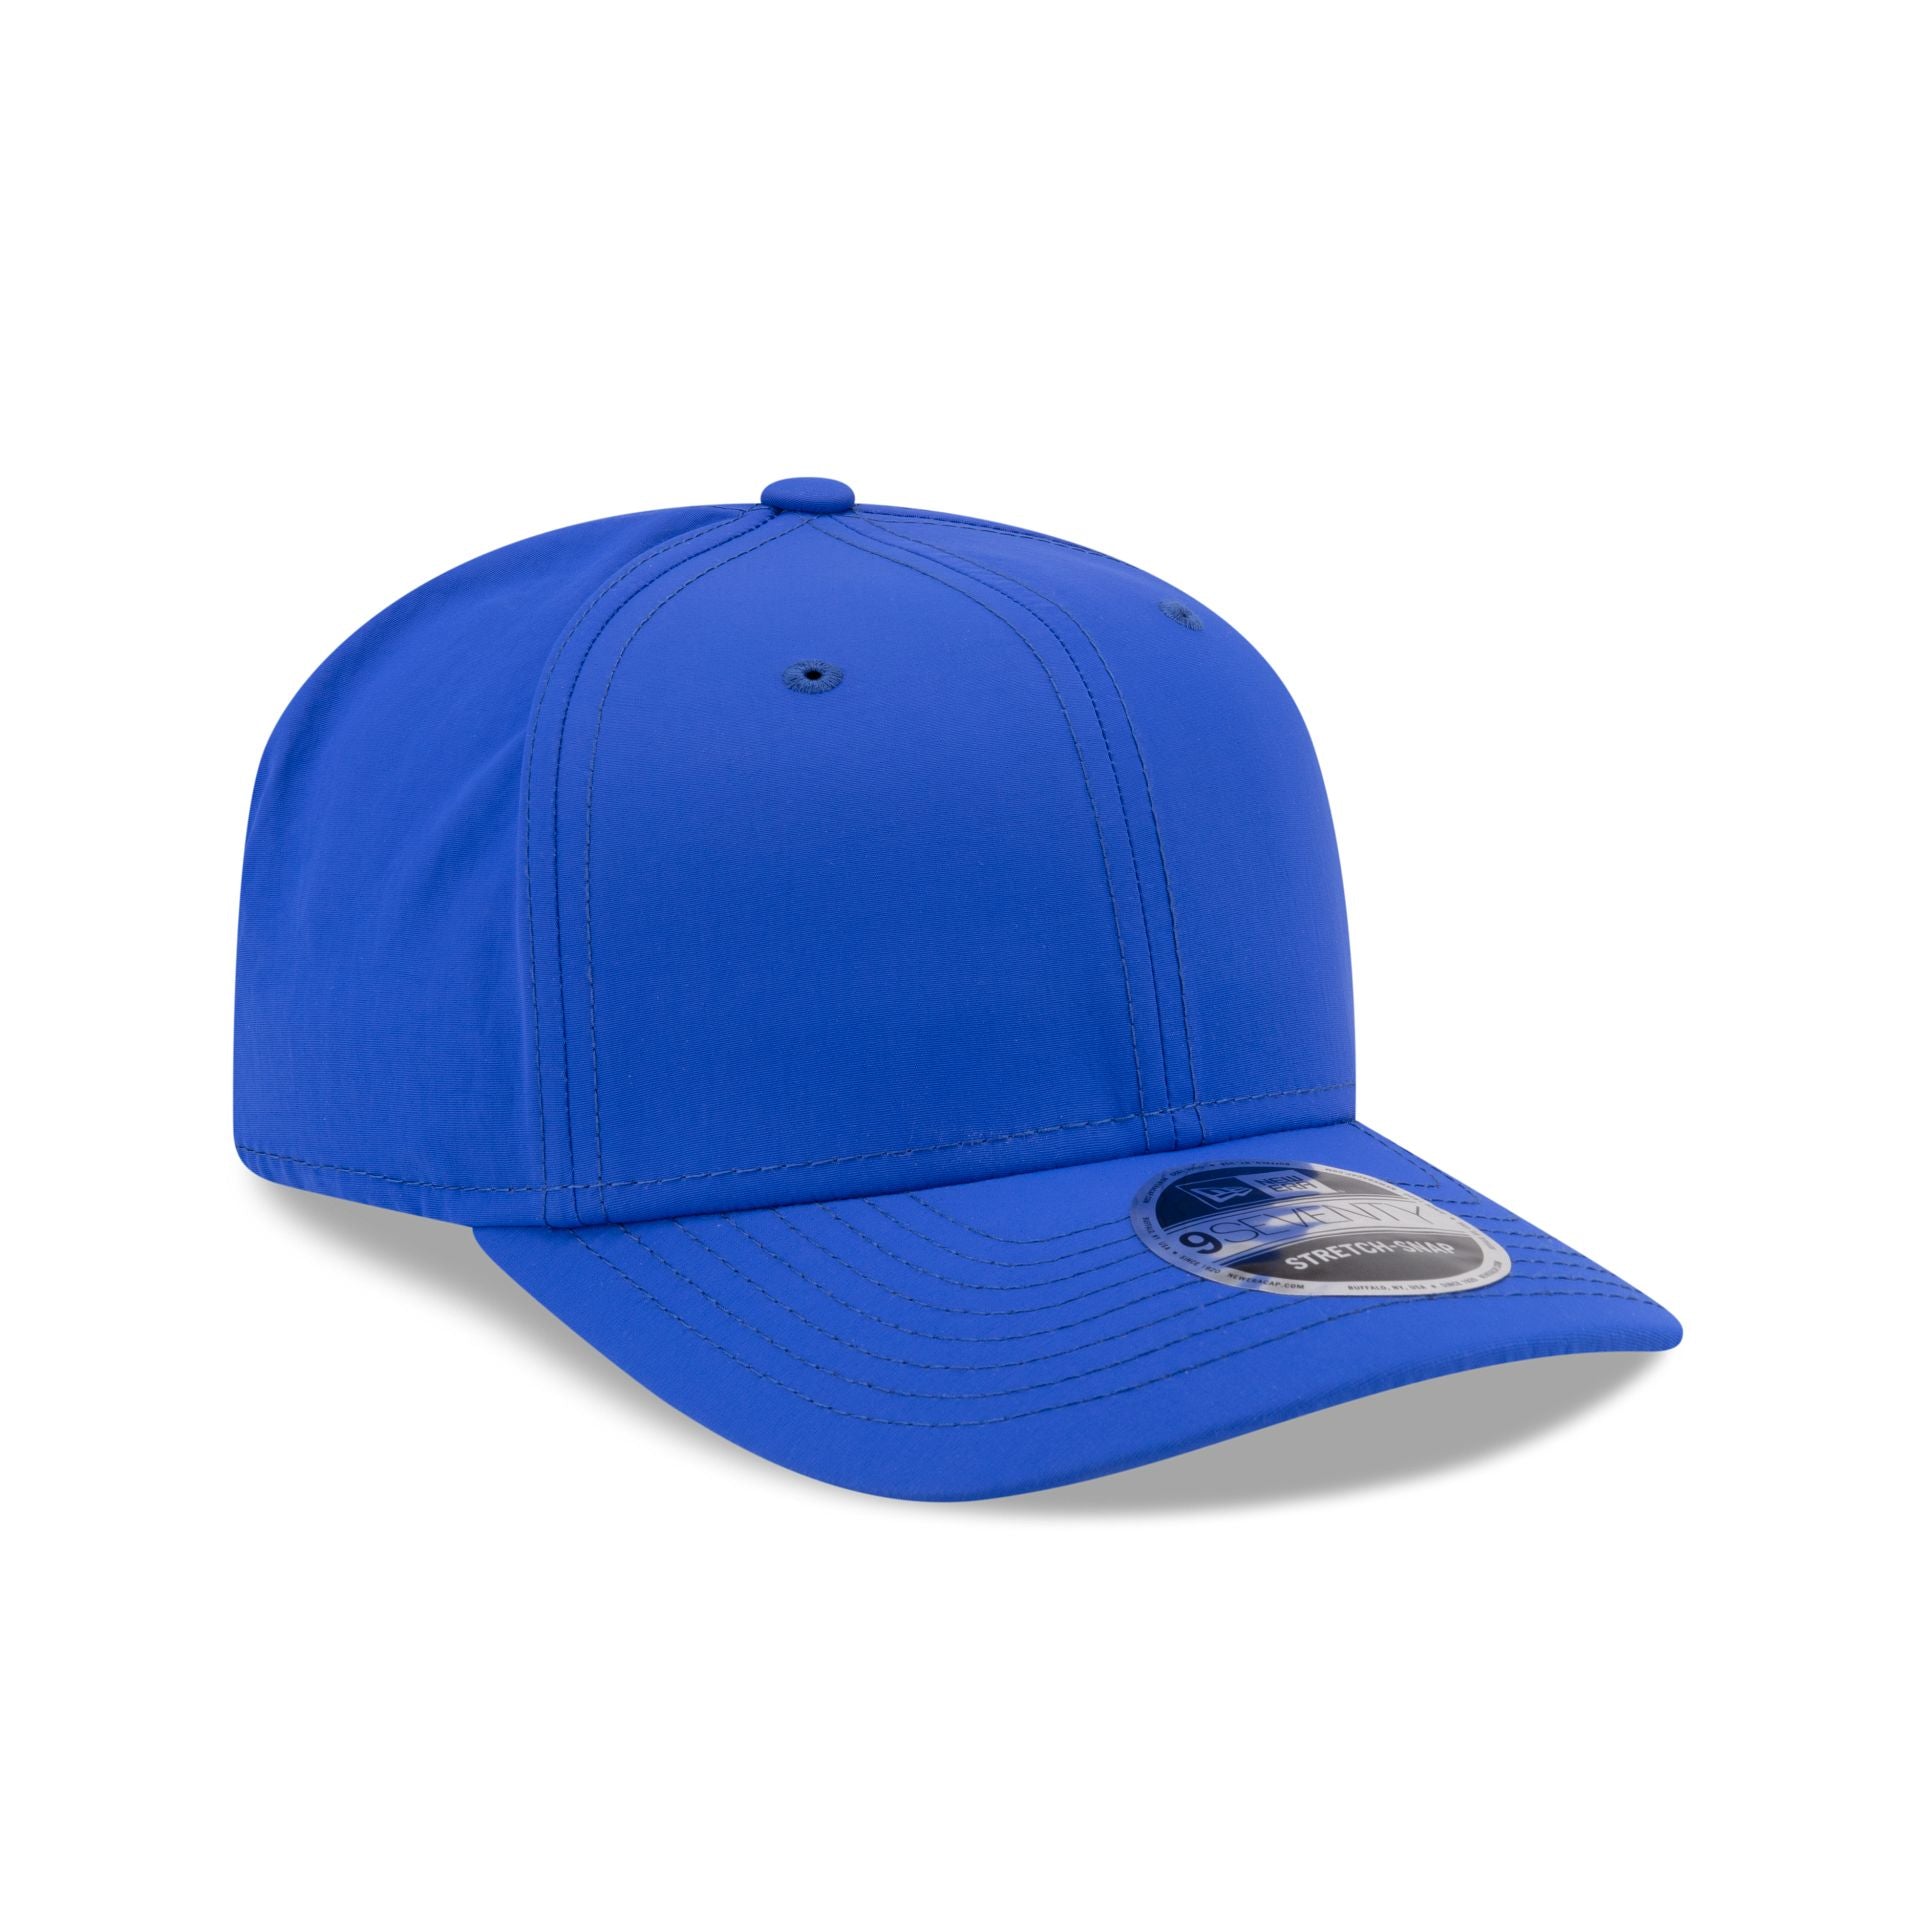 New Era Cap Blue Ripstop 9SEVENTY Adjustable Hat